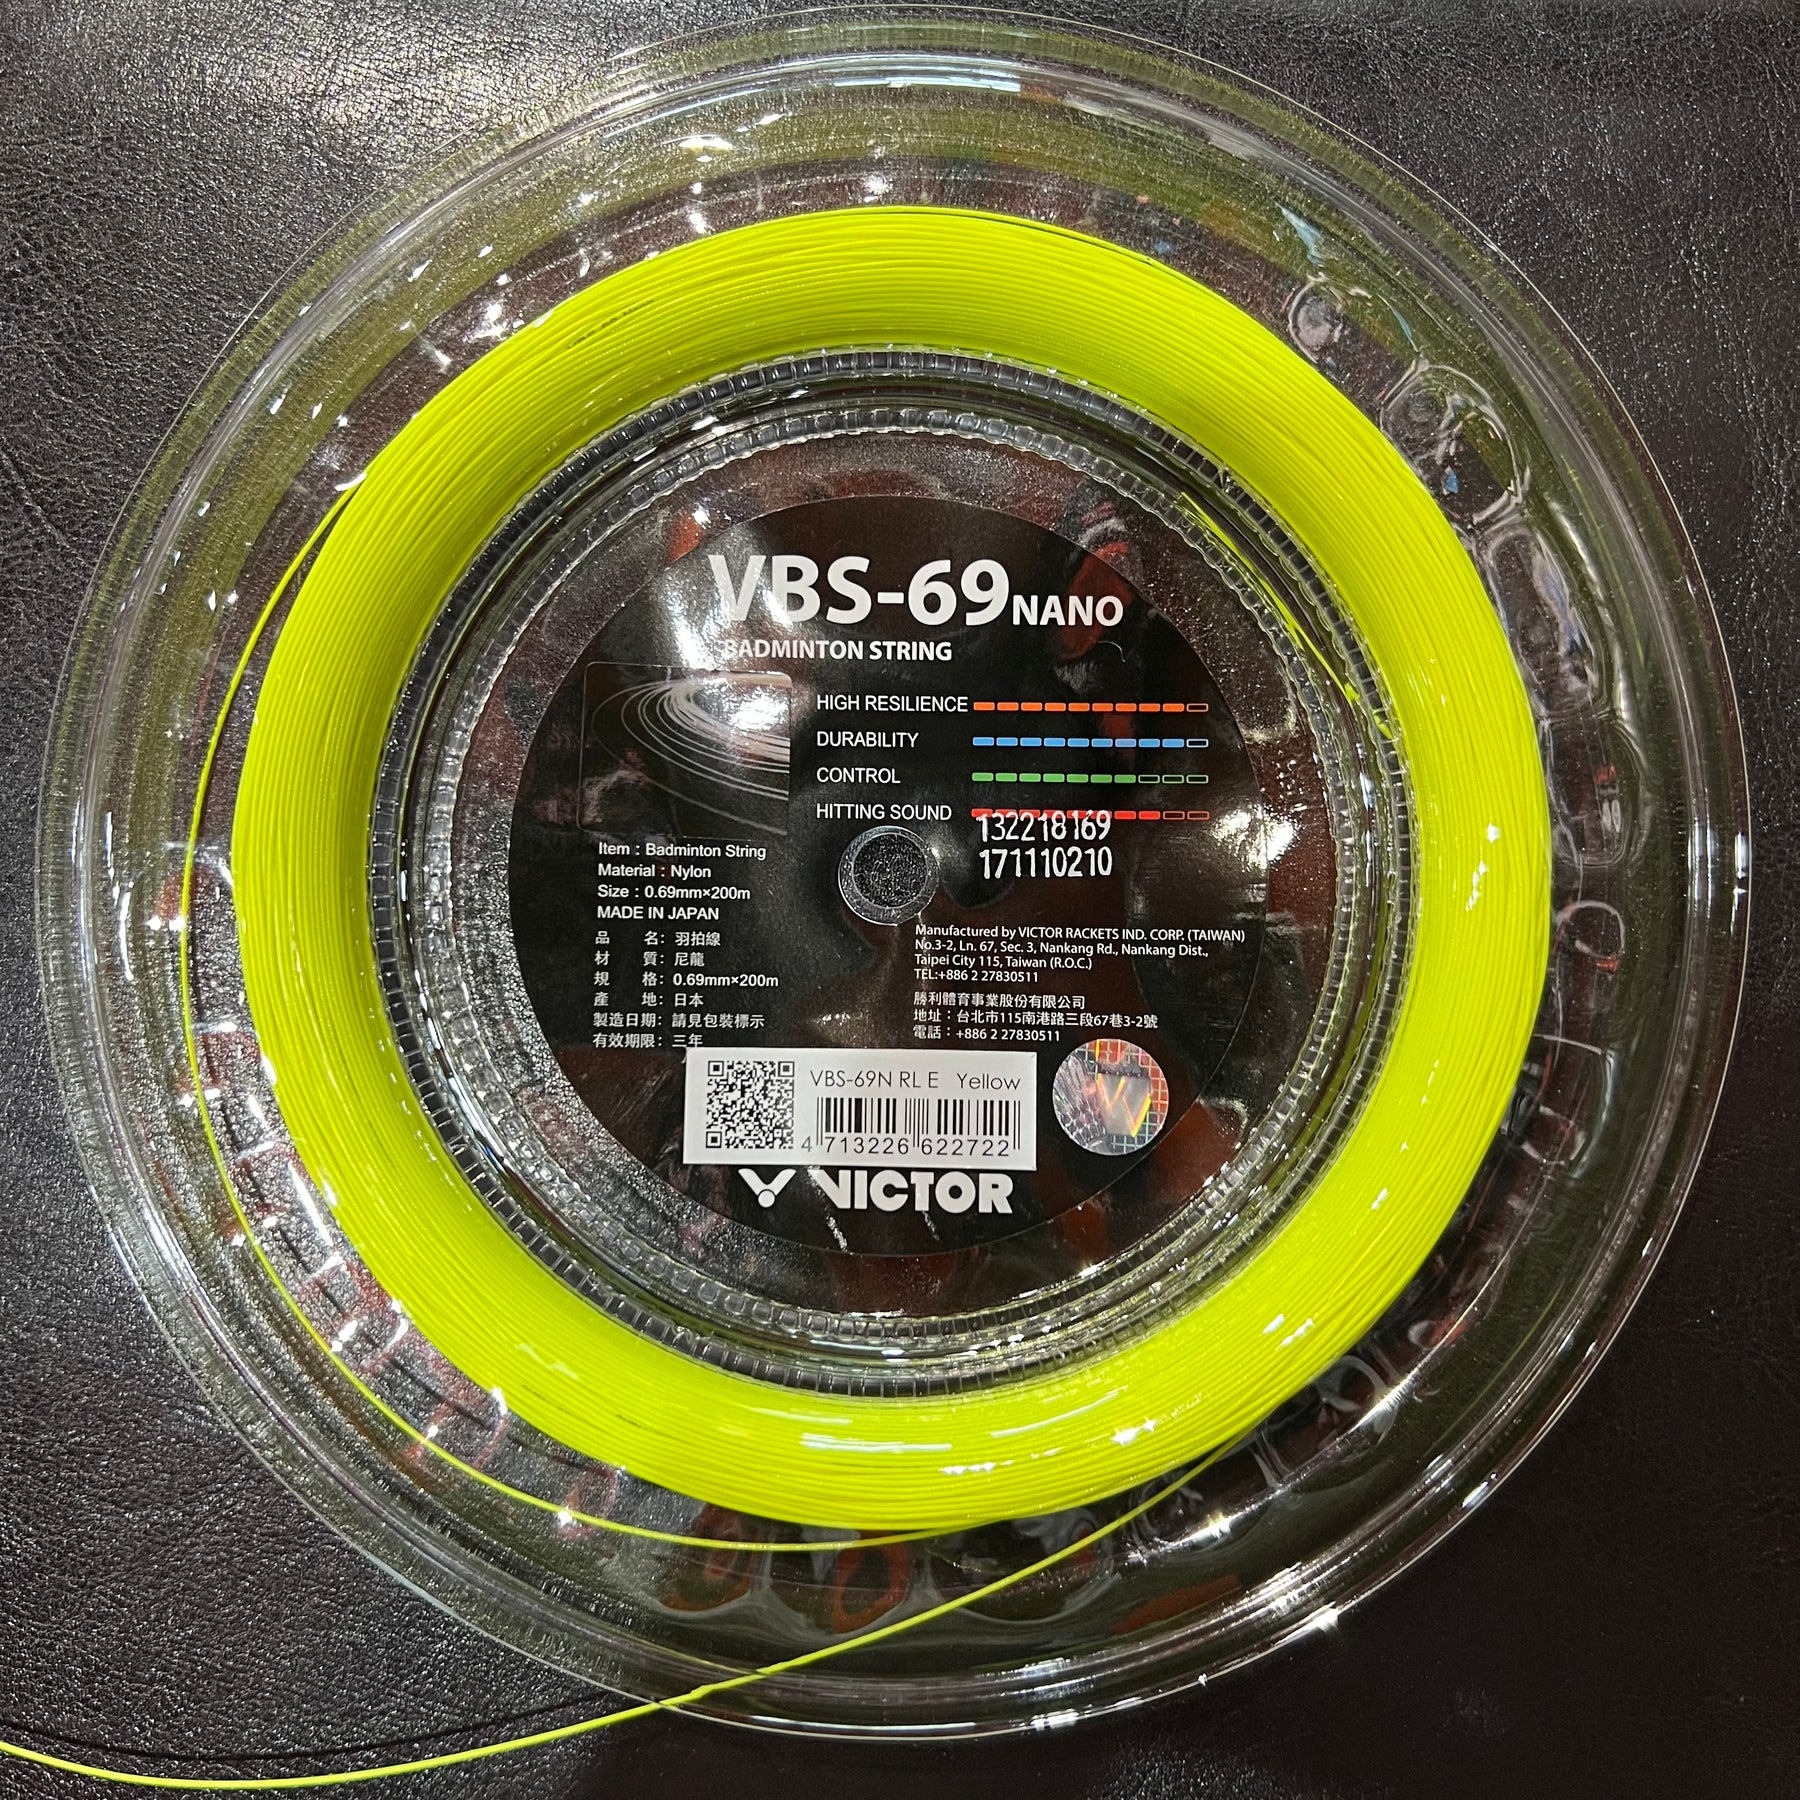 Victor Badminton String VBS-69 nano 200m reel – Pro Racquets